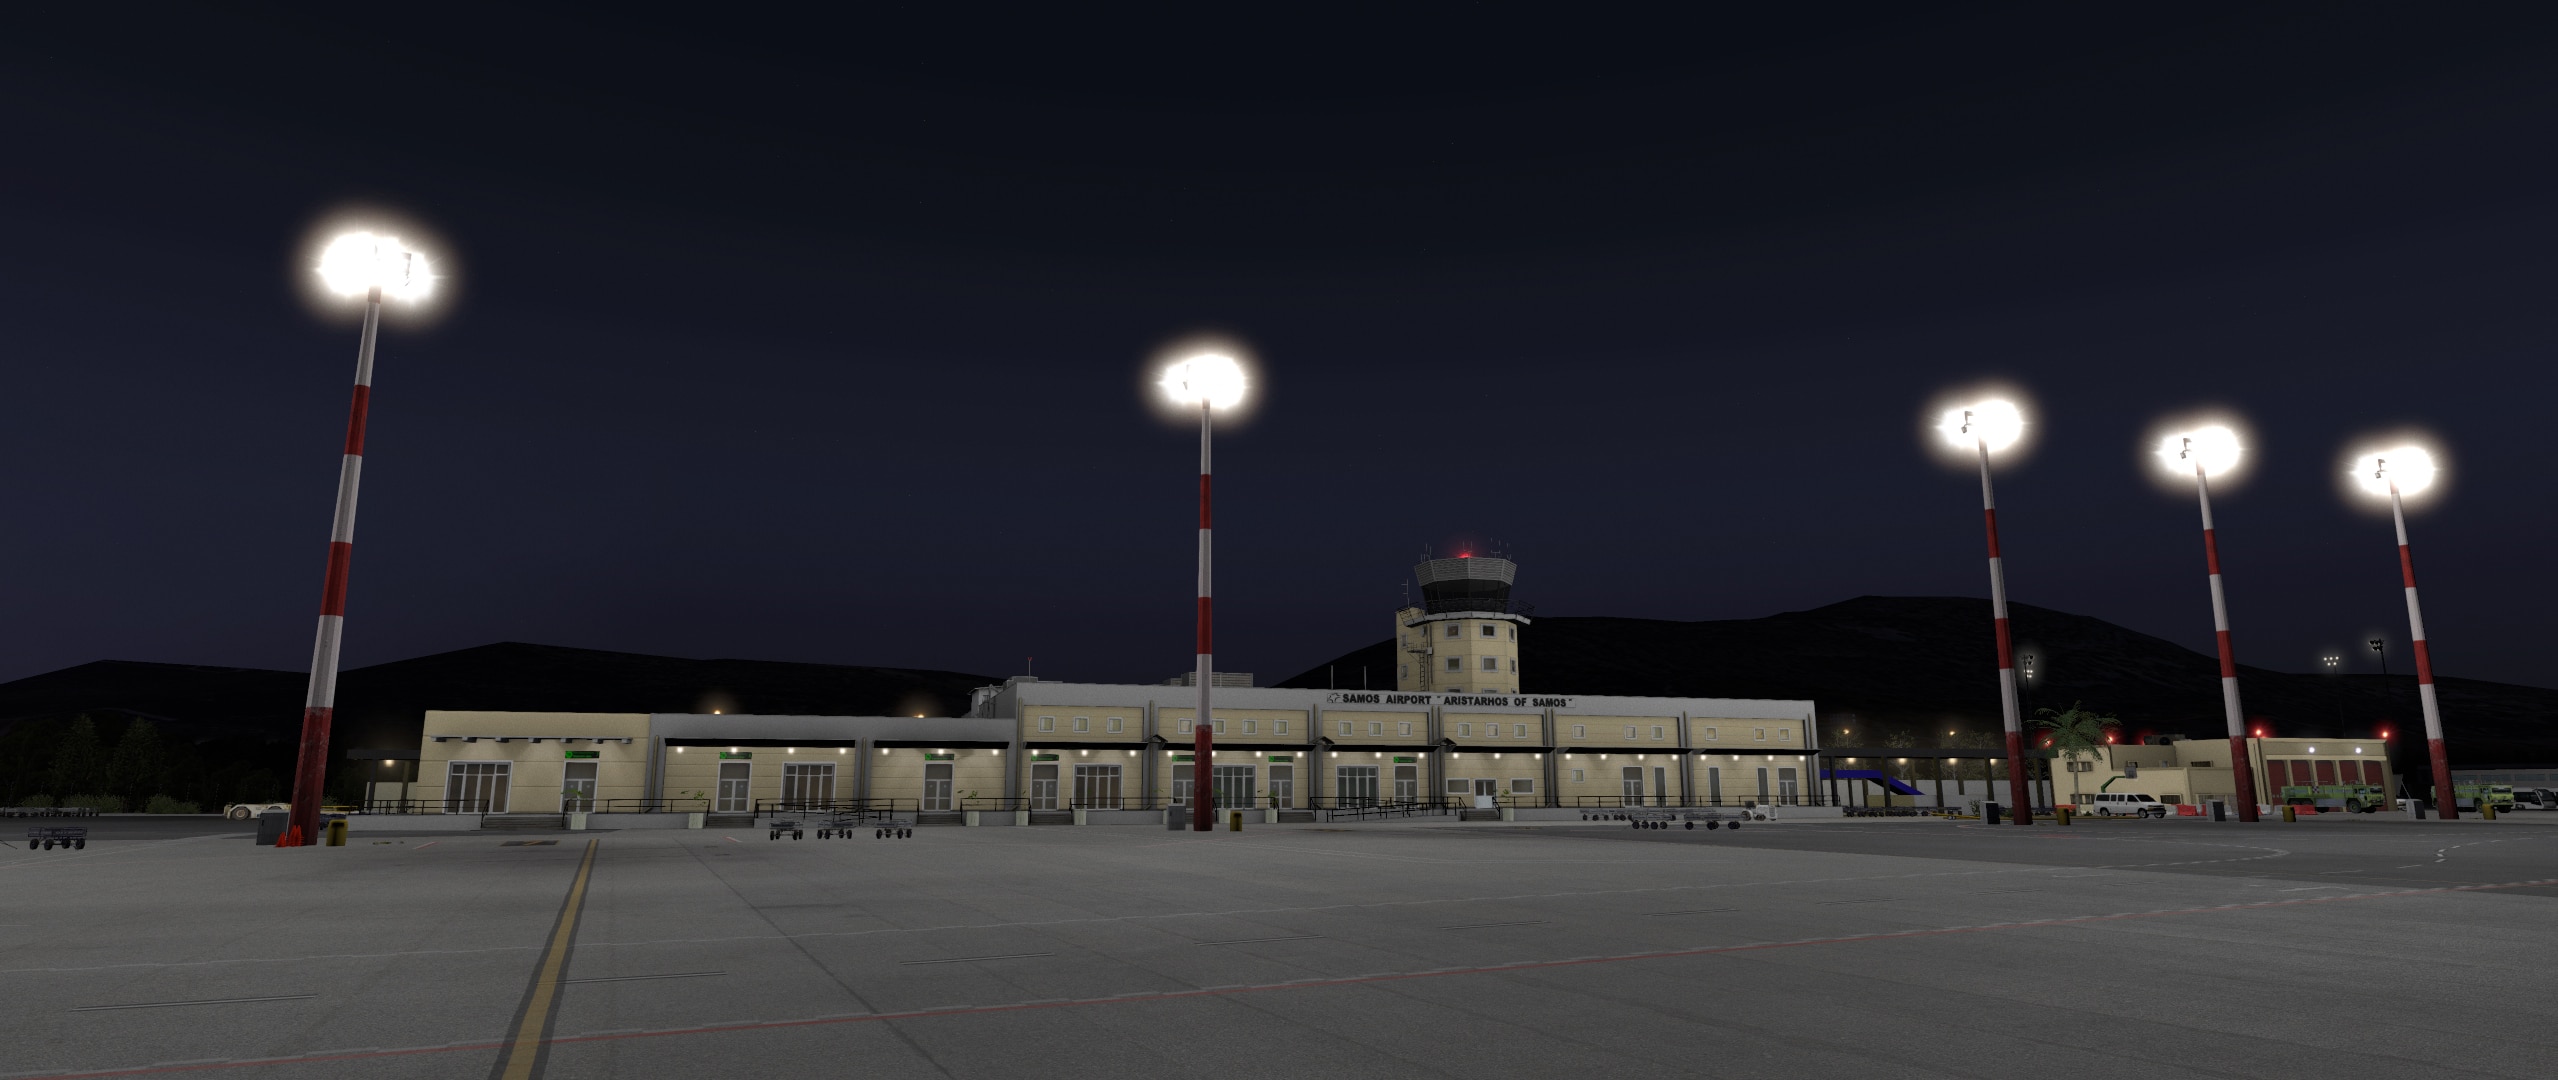 Skyline Simulations Release Samos Airport for X-Plane 11 - Skyline Simulations